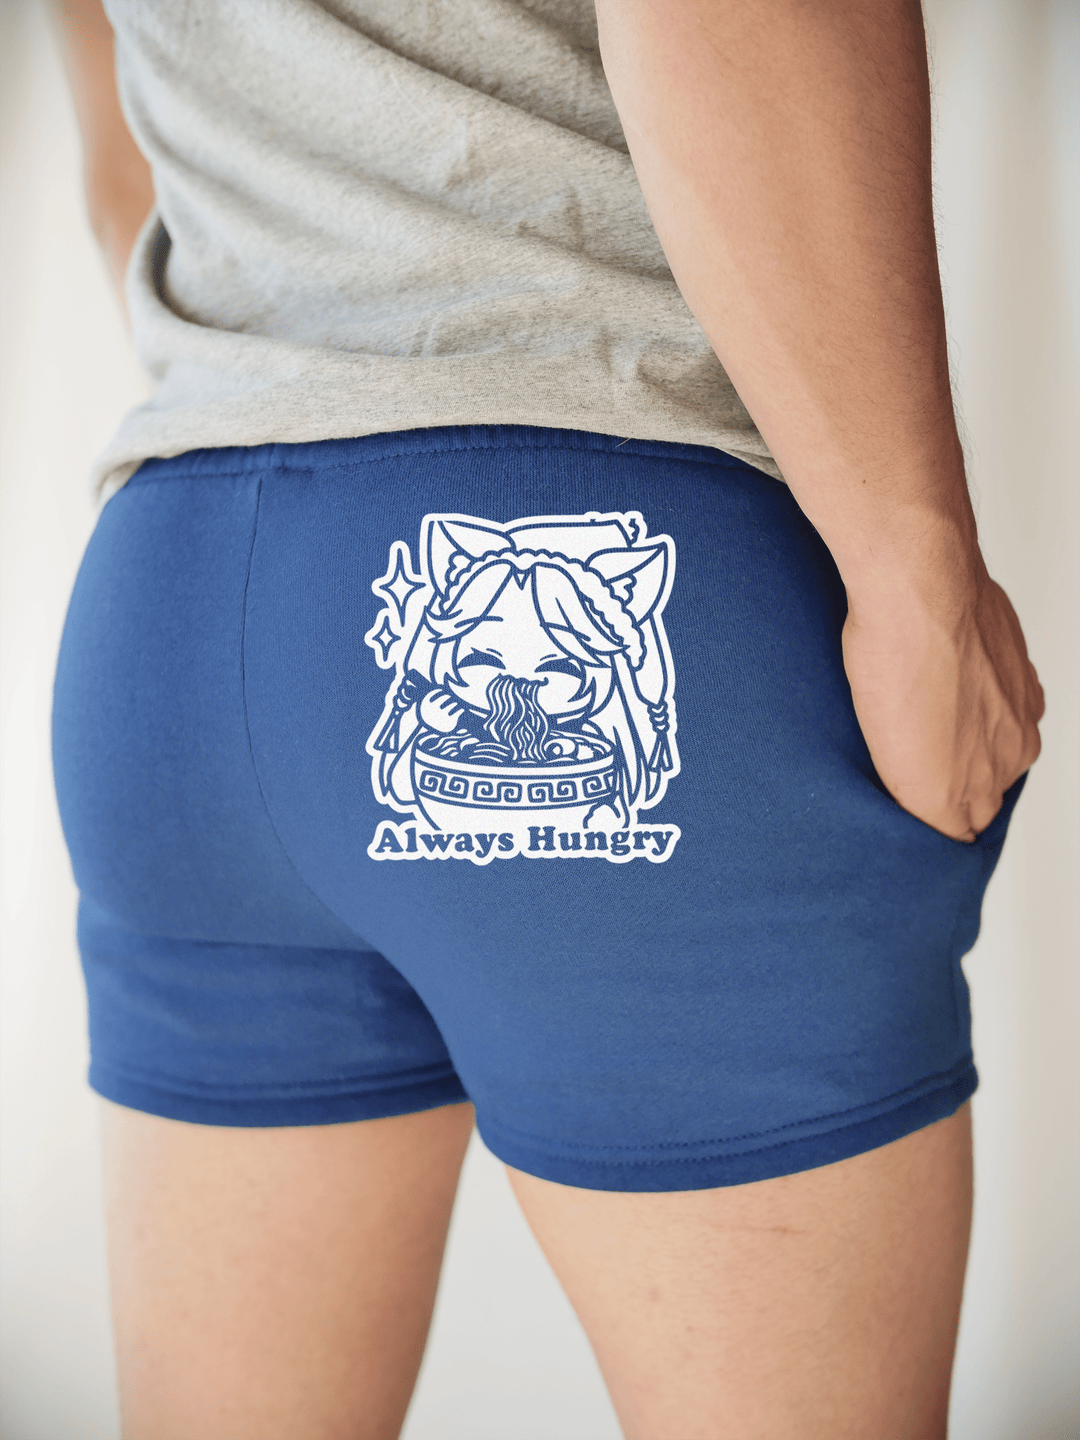 PixelThat Punderwear Shorts Royal Blue / S / Back Always Hungry Men's Gym Shorts